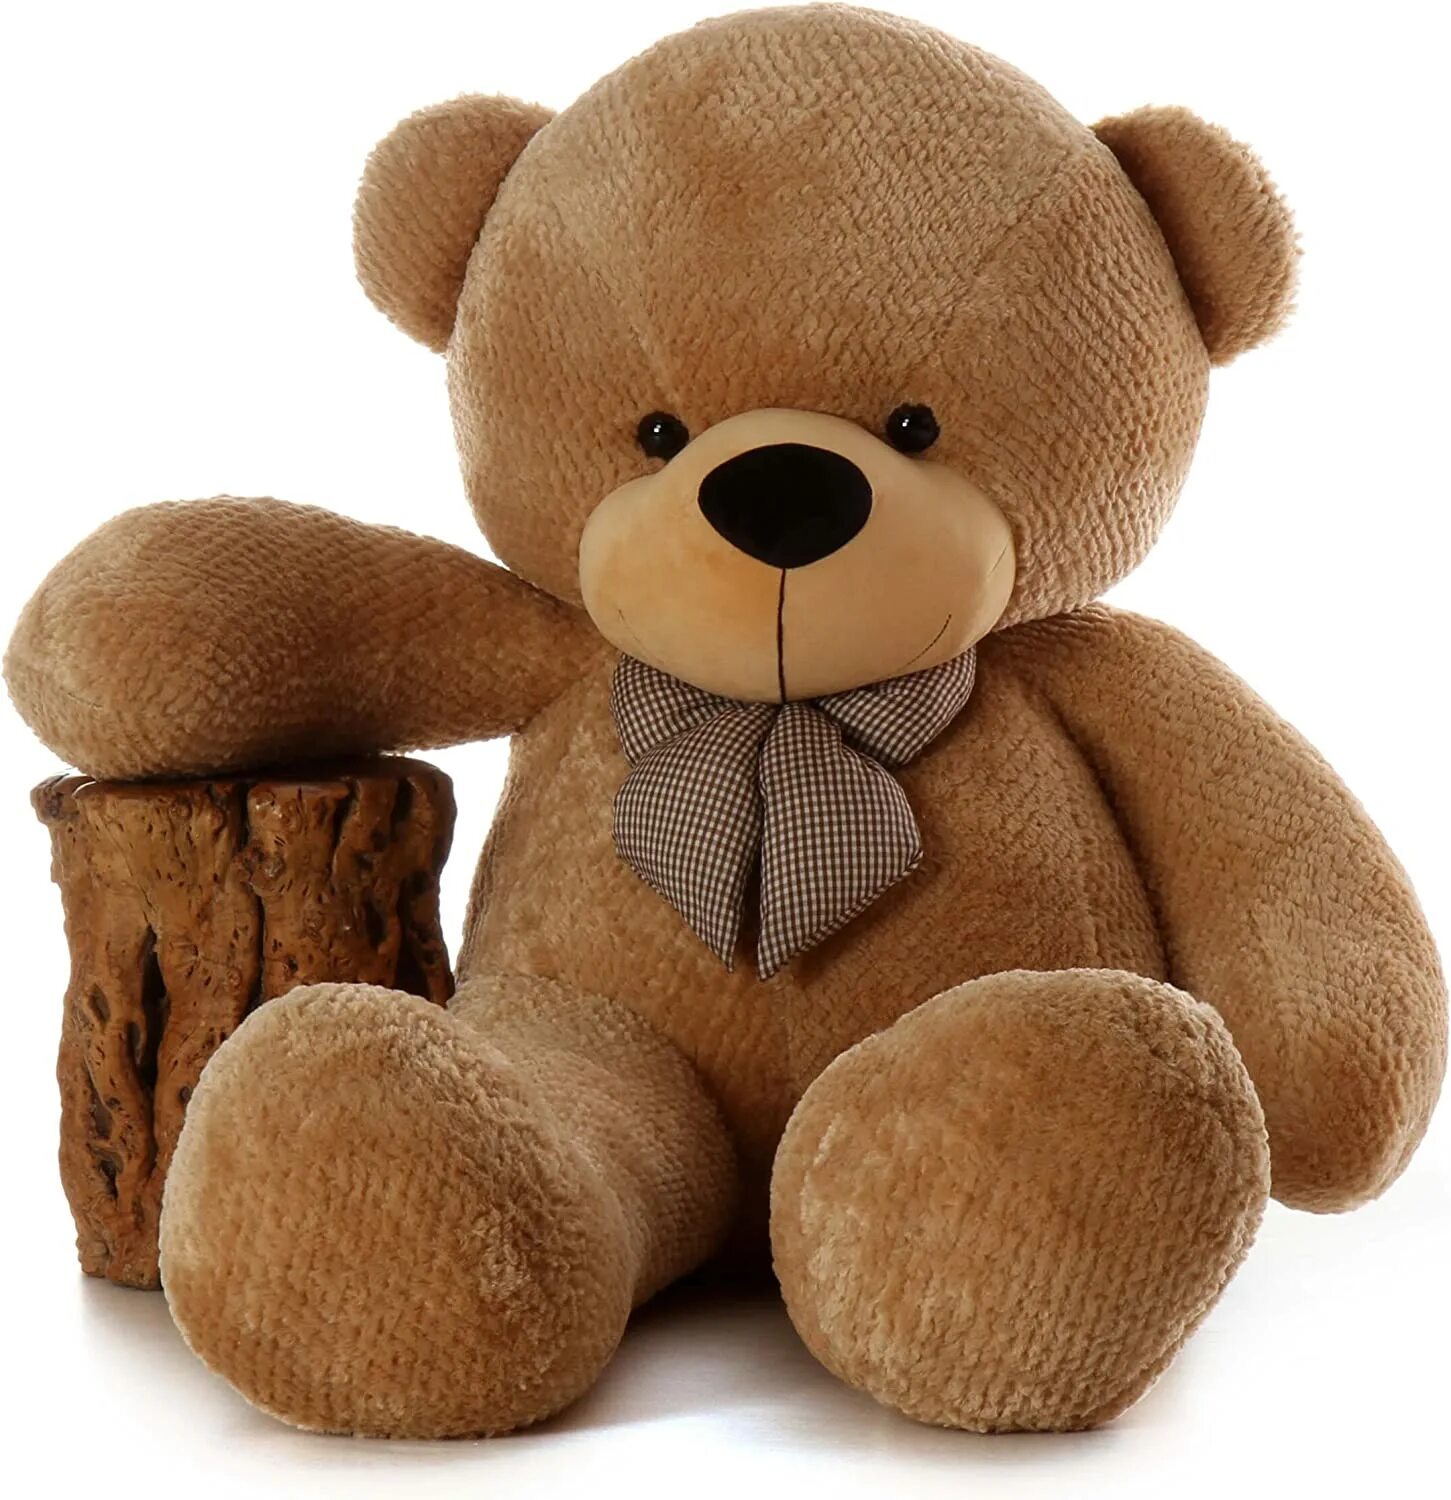 A brown teddy bear. Плюшевый мишка. Brown Teddy. Big Teddy Bear. Jimmy Teddy.